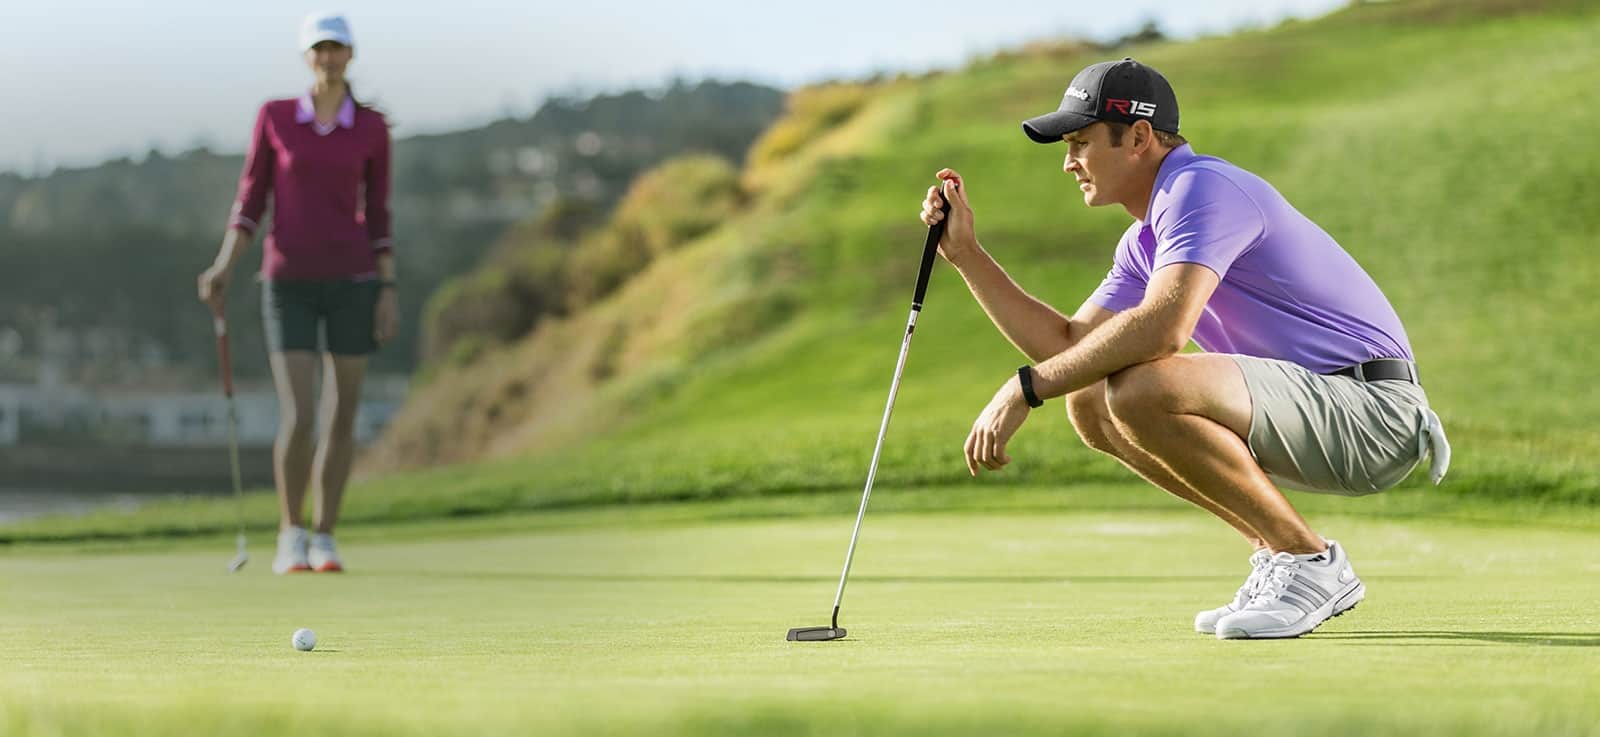 Microsoft and PGA TOUR strike three-year technology agreement - OnMSFT.com - November 2, 2015